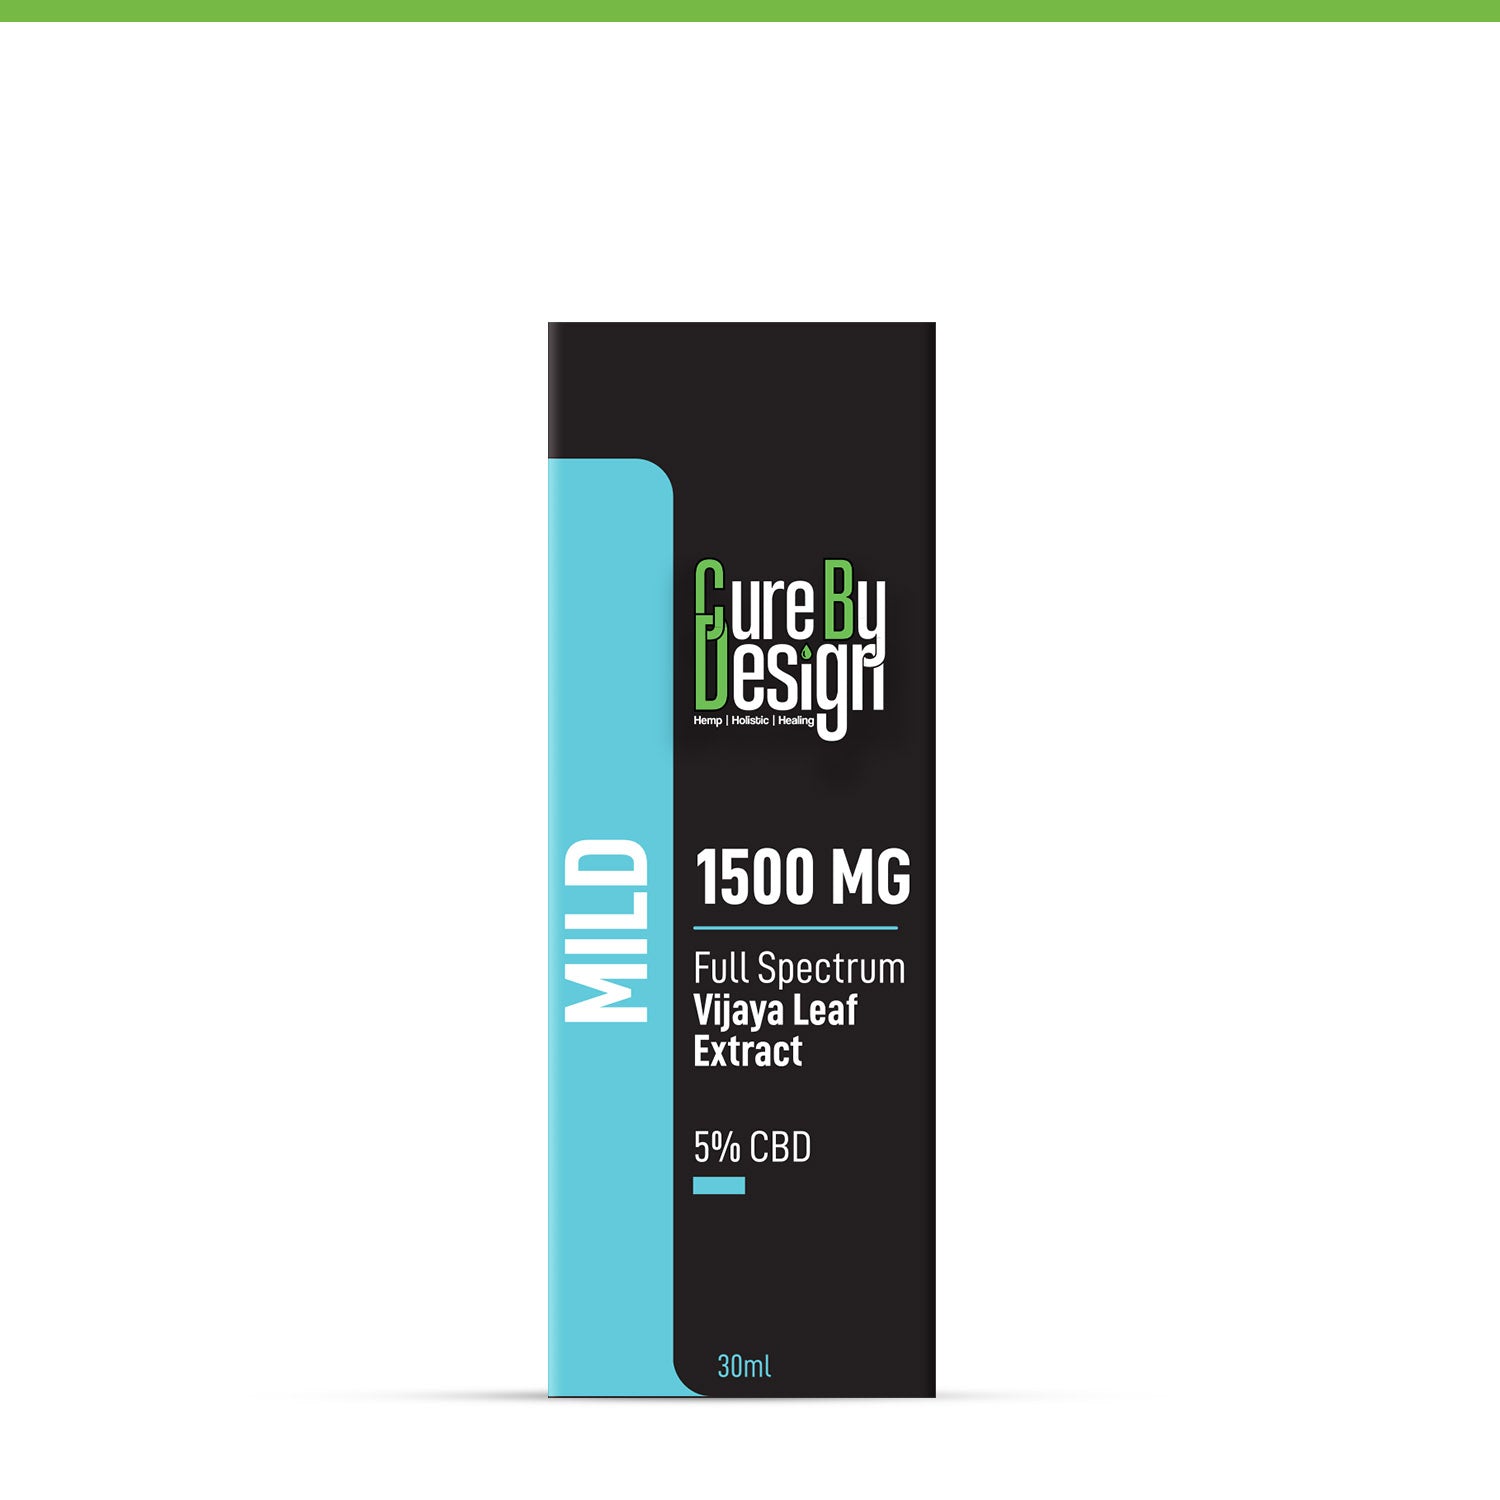 Cure By Design - Full-Spectrum Vijaya Leaf Extract, 5% CBD, 1500MG (Mild) - CBD Store India